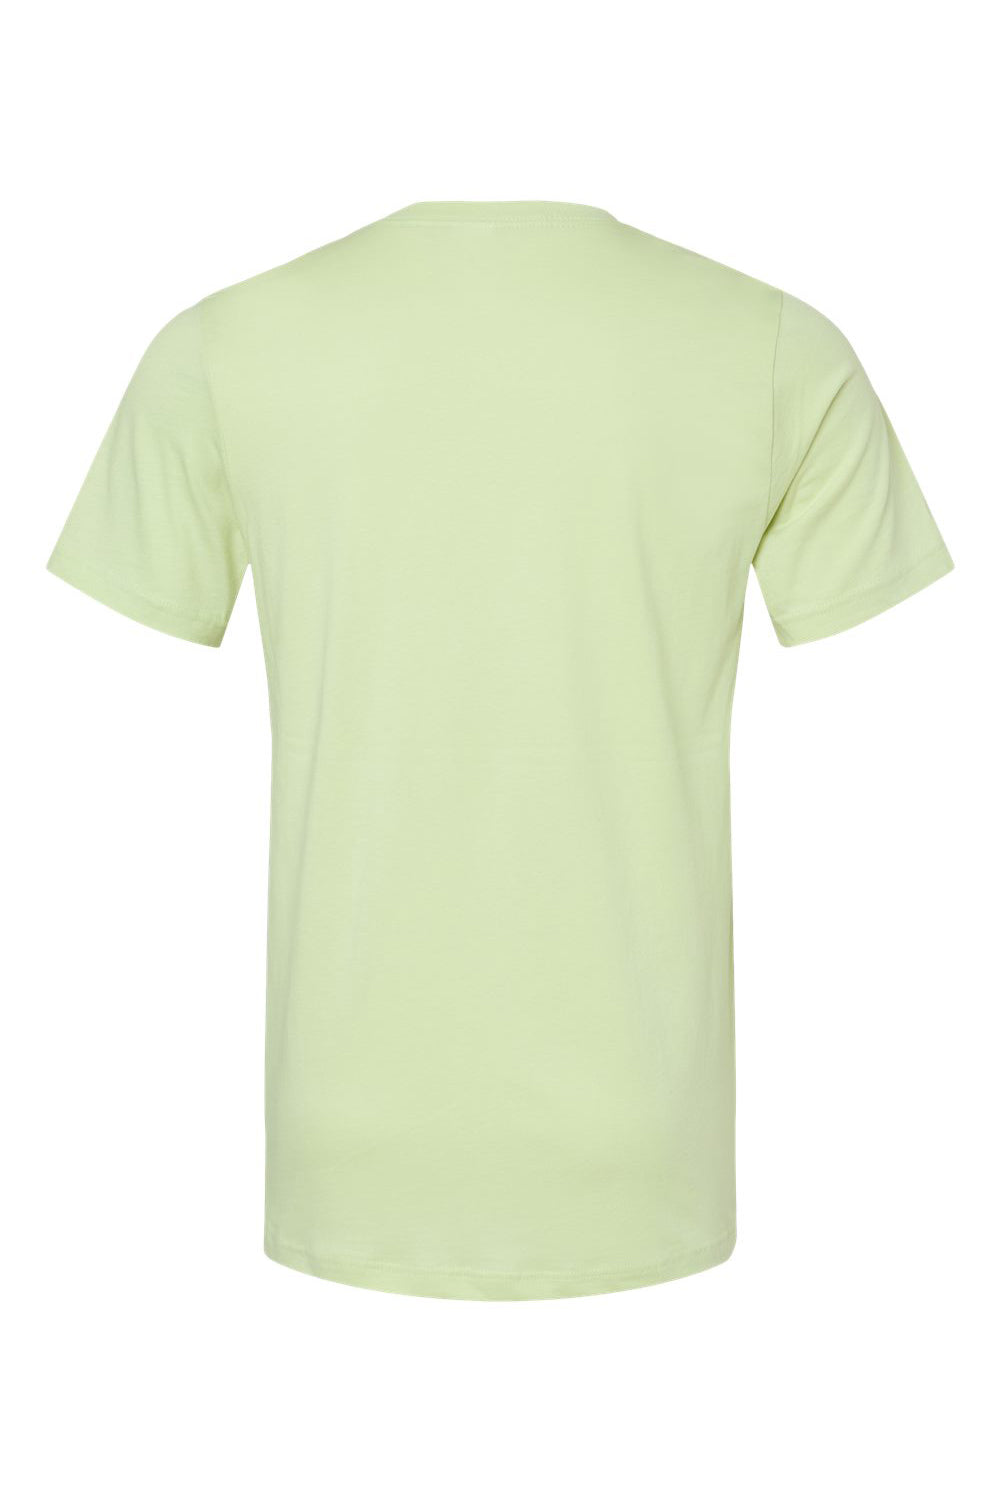 Bella + Canvas BC3001/3001C Mens Jersey Short Sleeve Crewneck T-Shirt Spring Green Flat Back